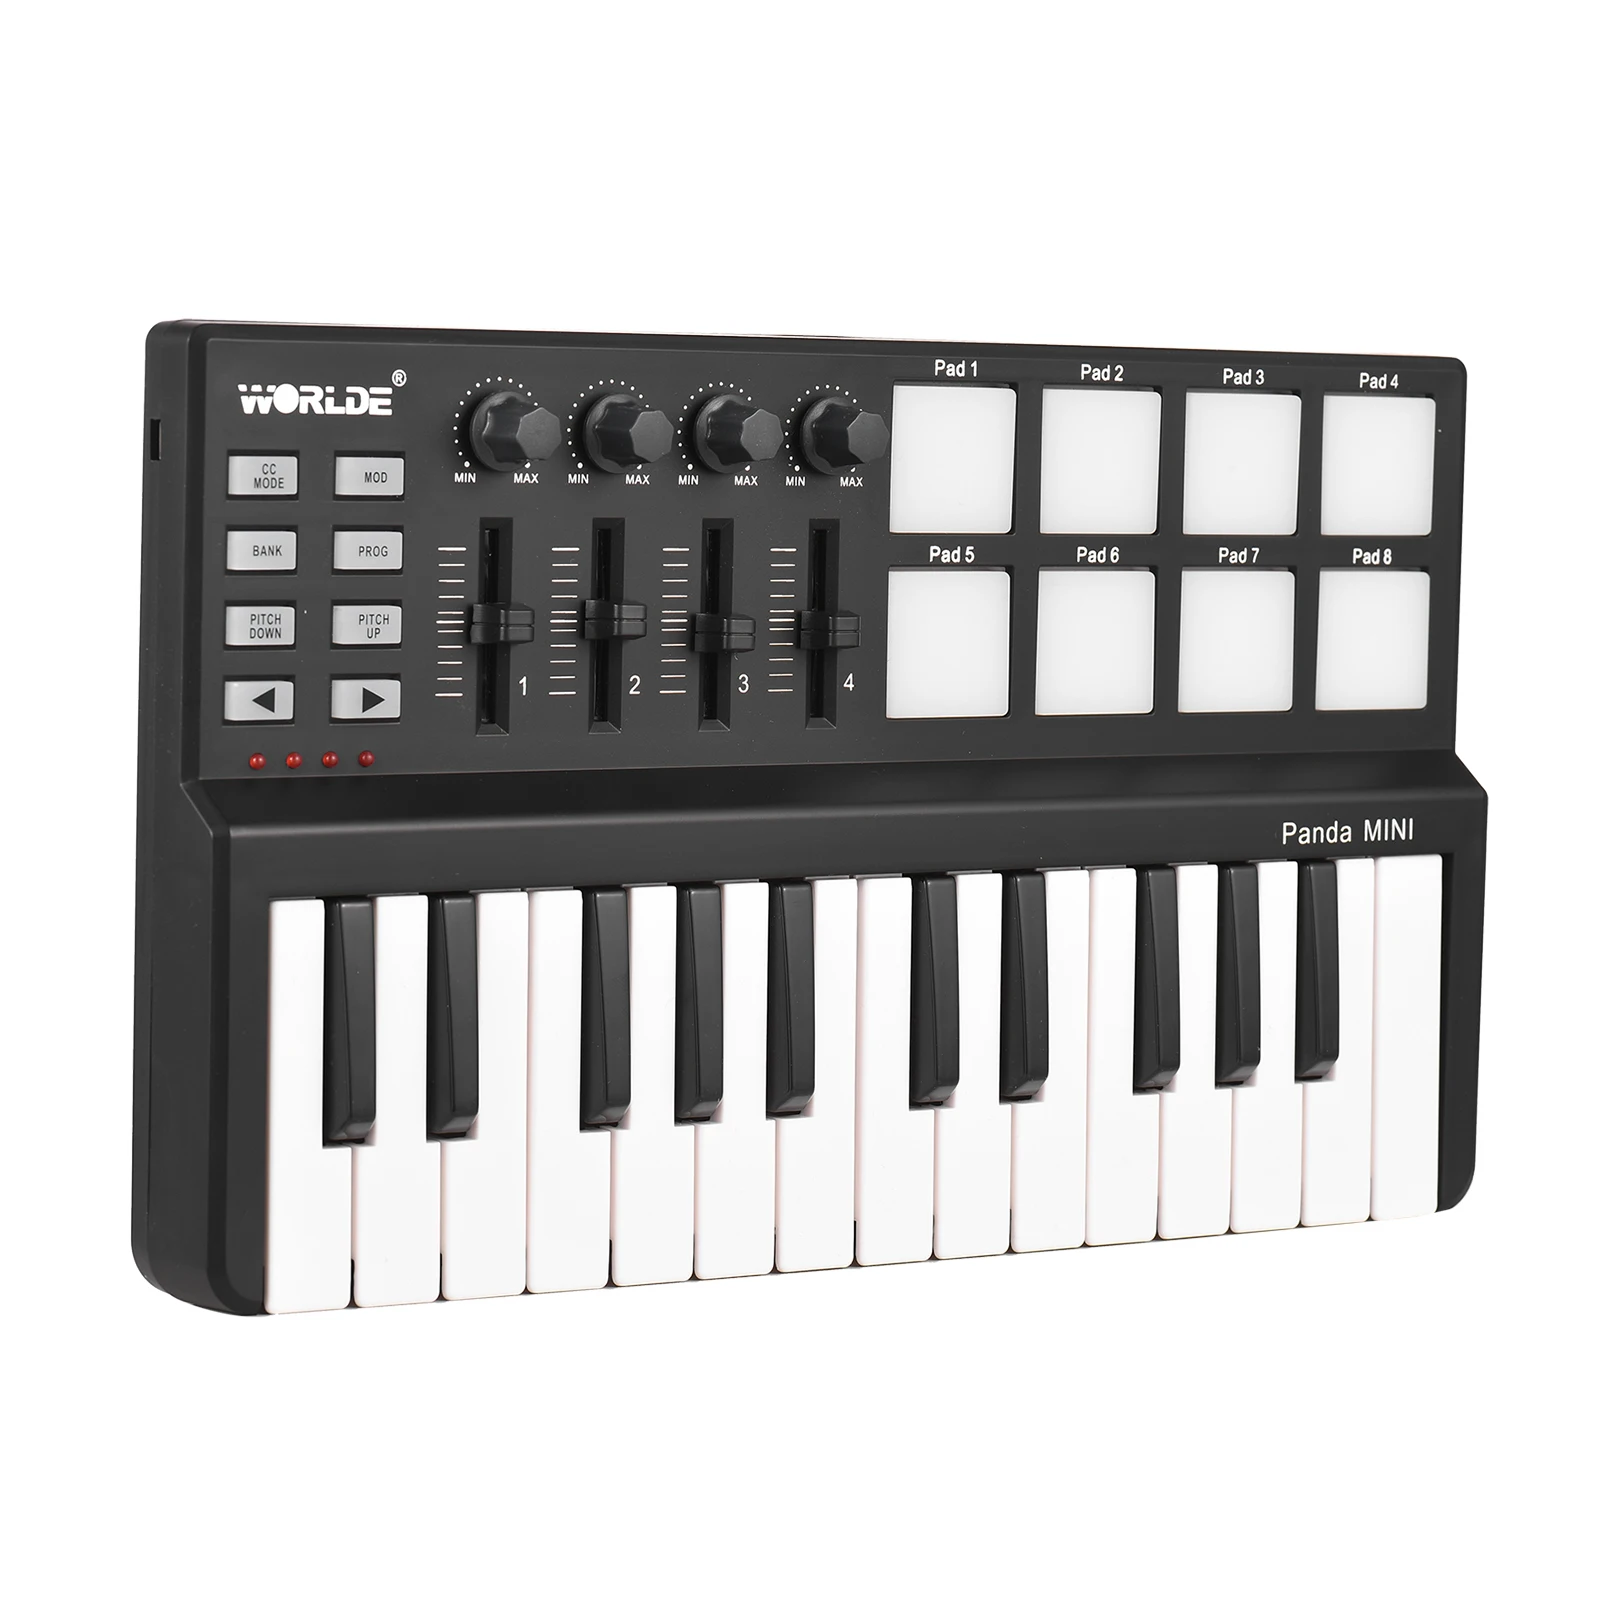 Worlde Panda Midi Keyboard Mini 25-key Usb Electric Keyboard And Drum Pad Midi Controller Musical Midi - Parts & Accessories - AliExpress